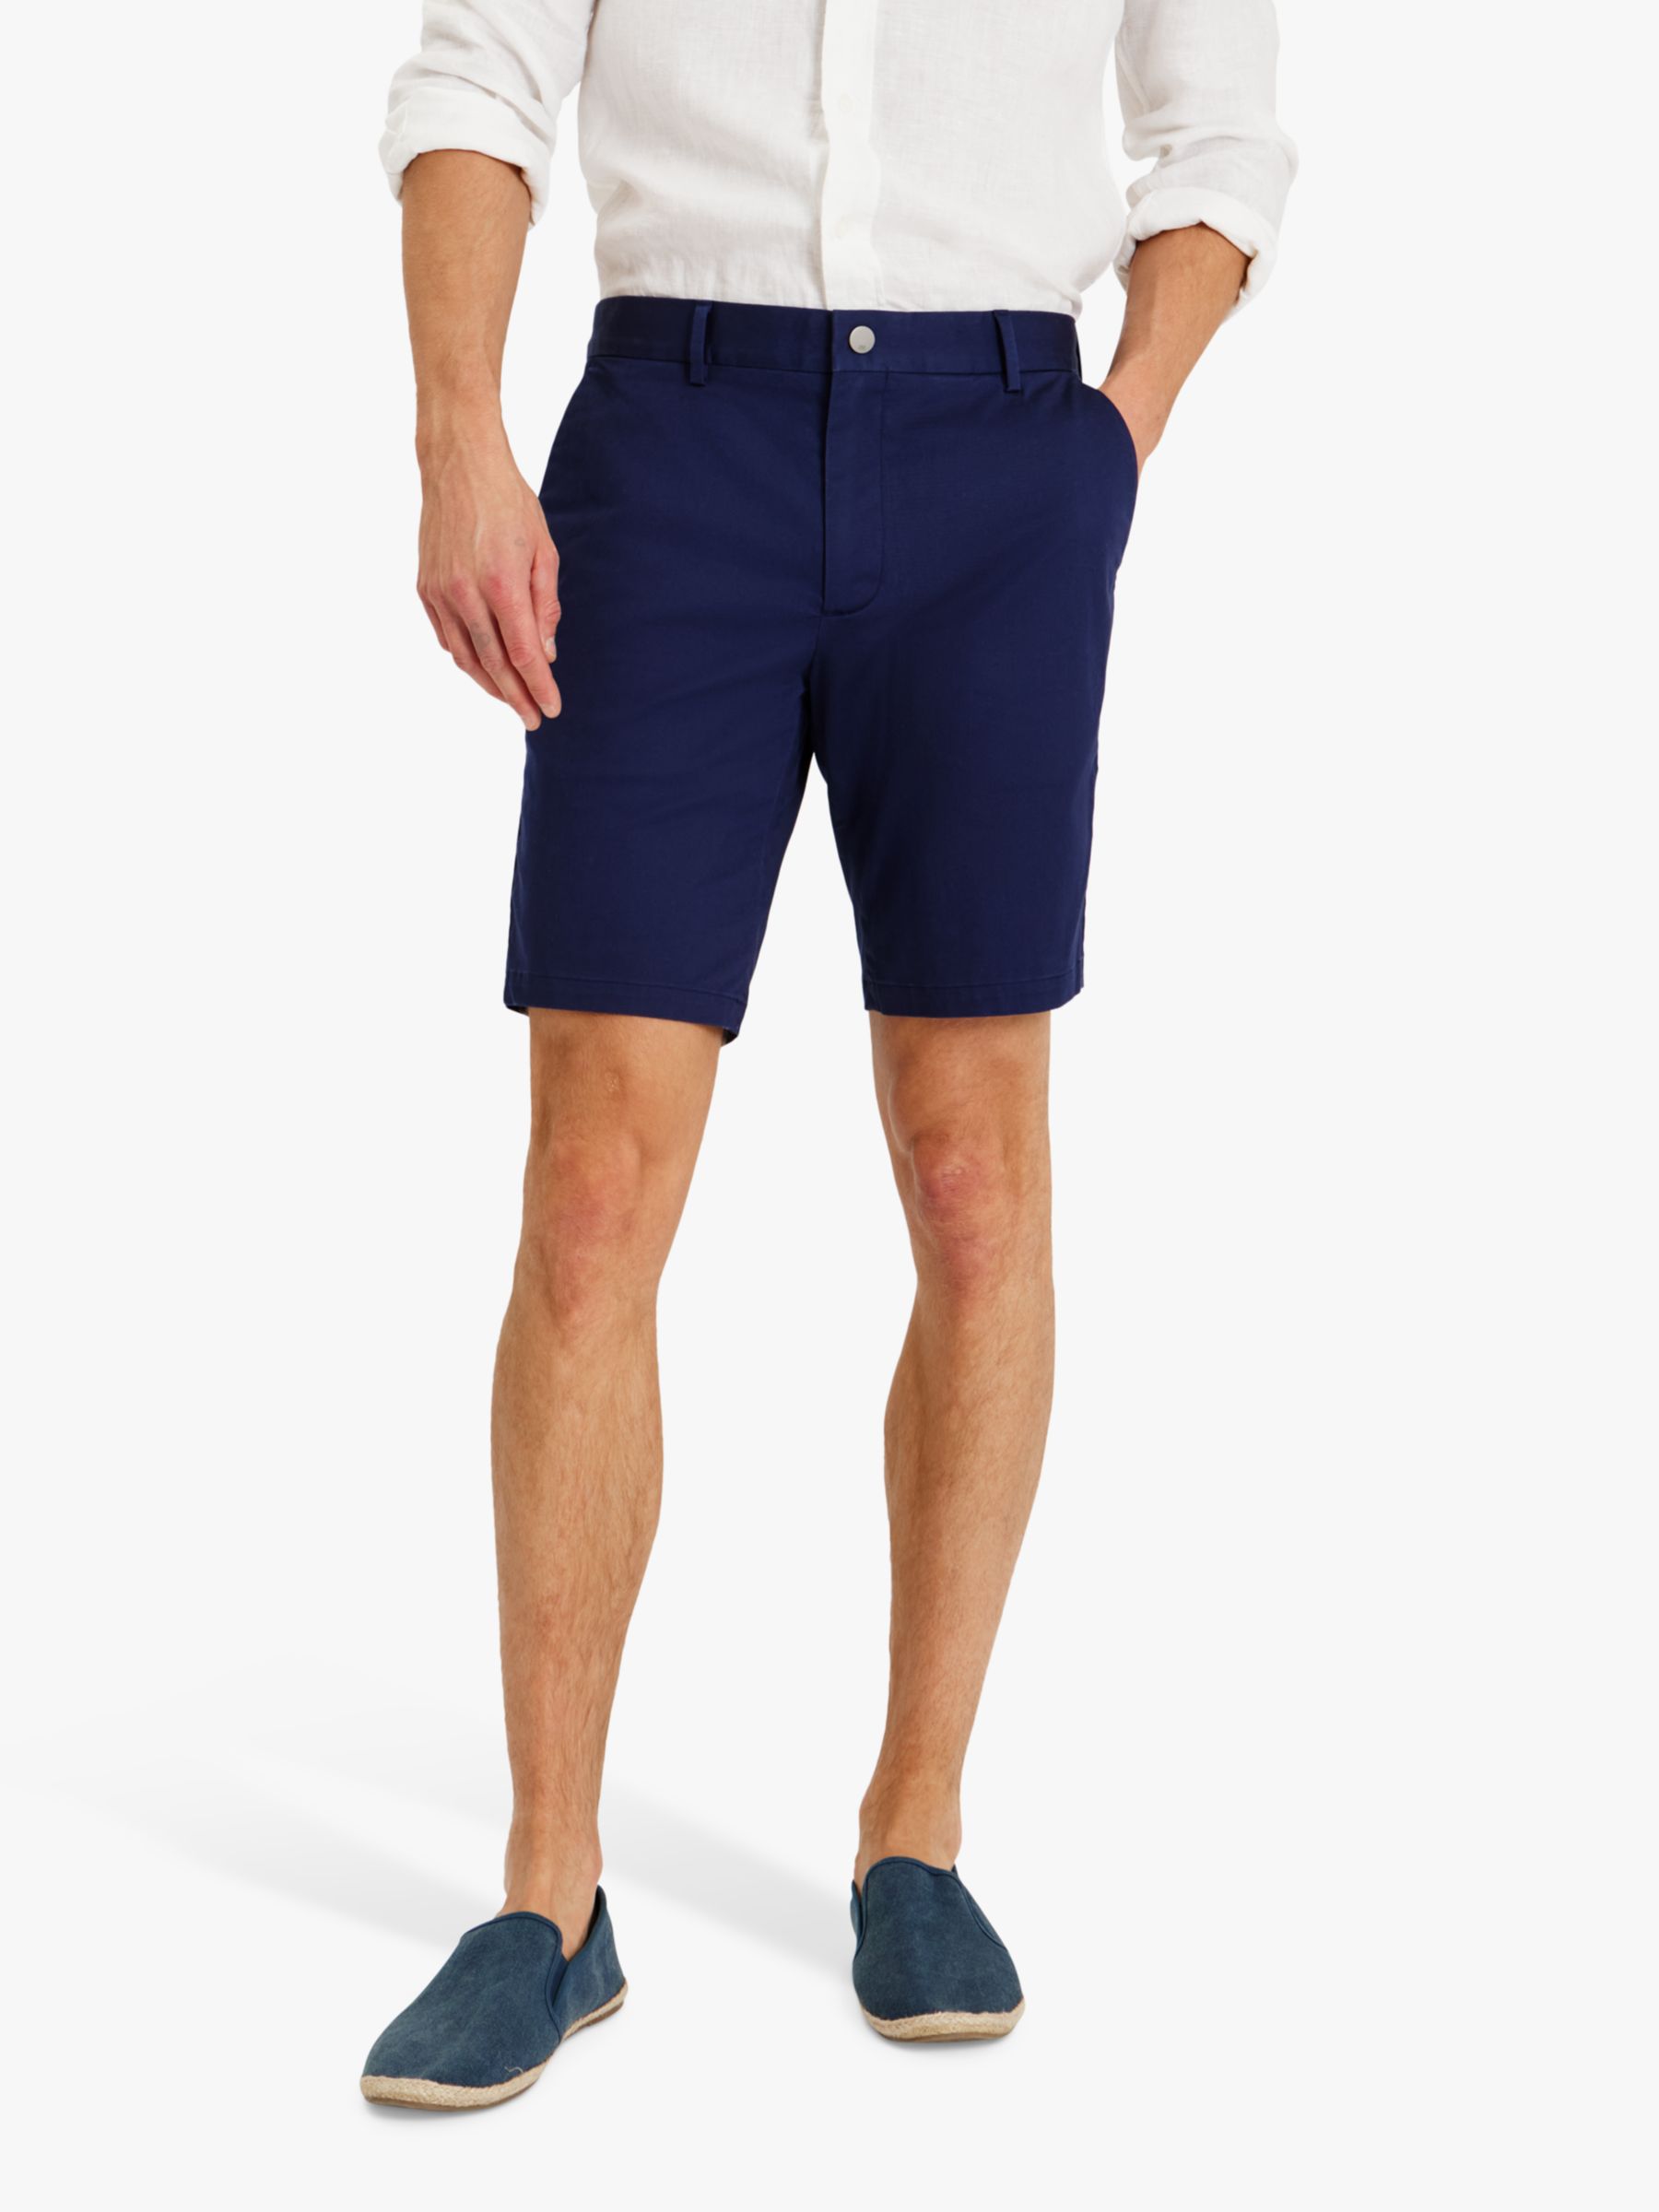 SPOKE Sharps Cotton Blend Narrow Thigh Shorts, Navy, 28S